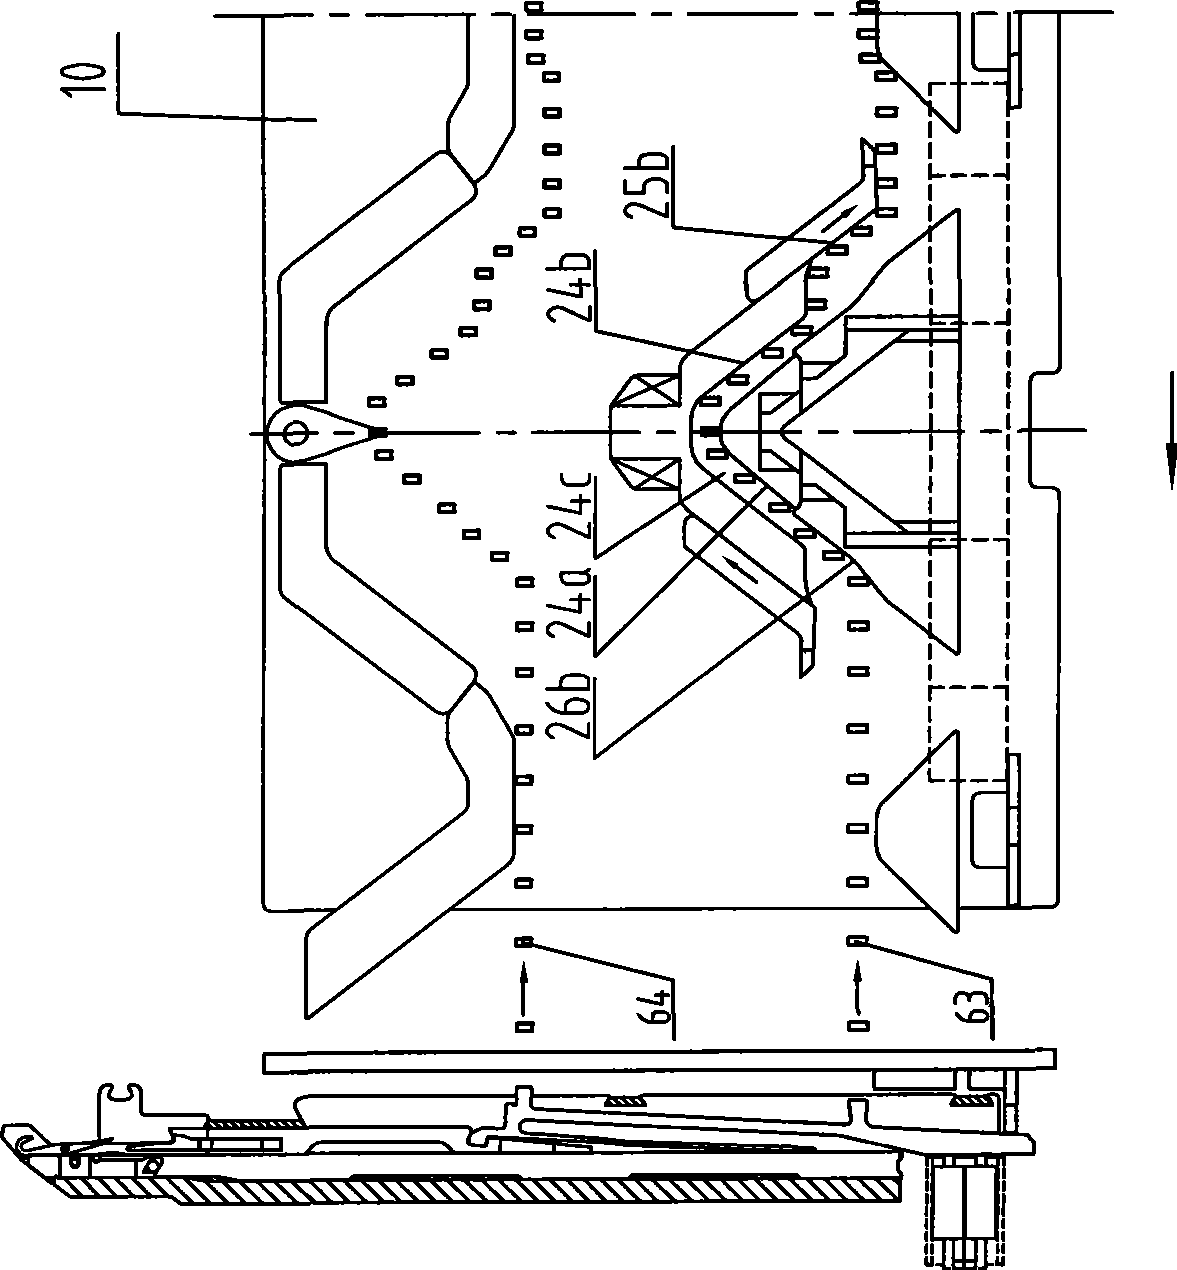 Triangular weaving mechanism